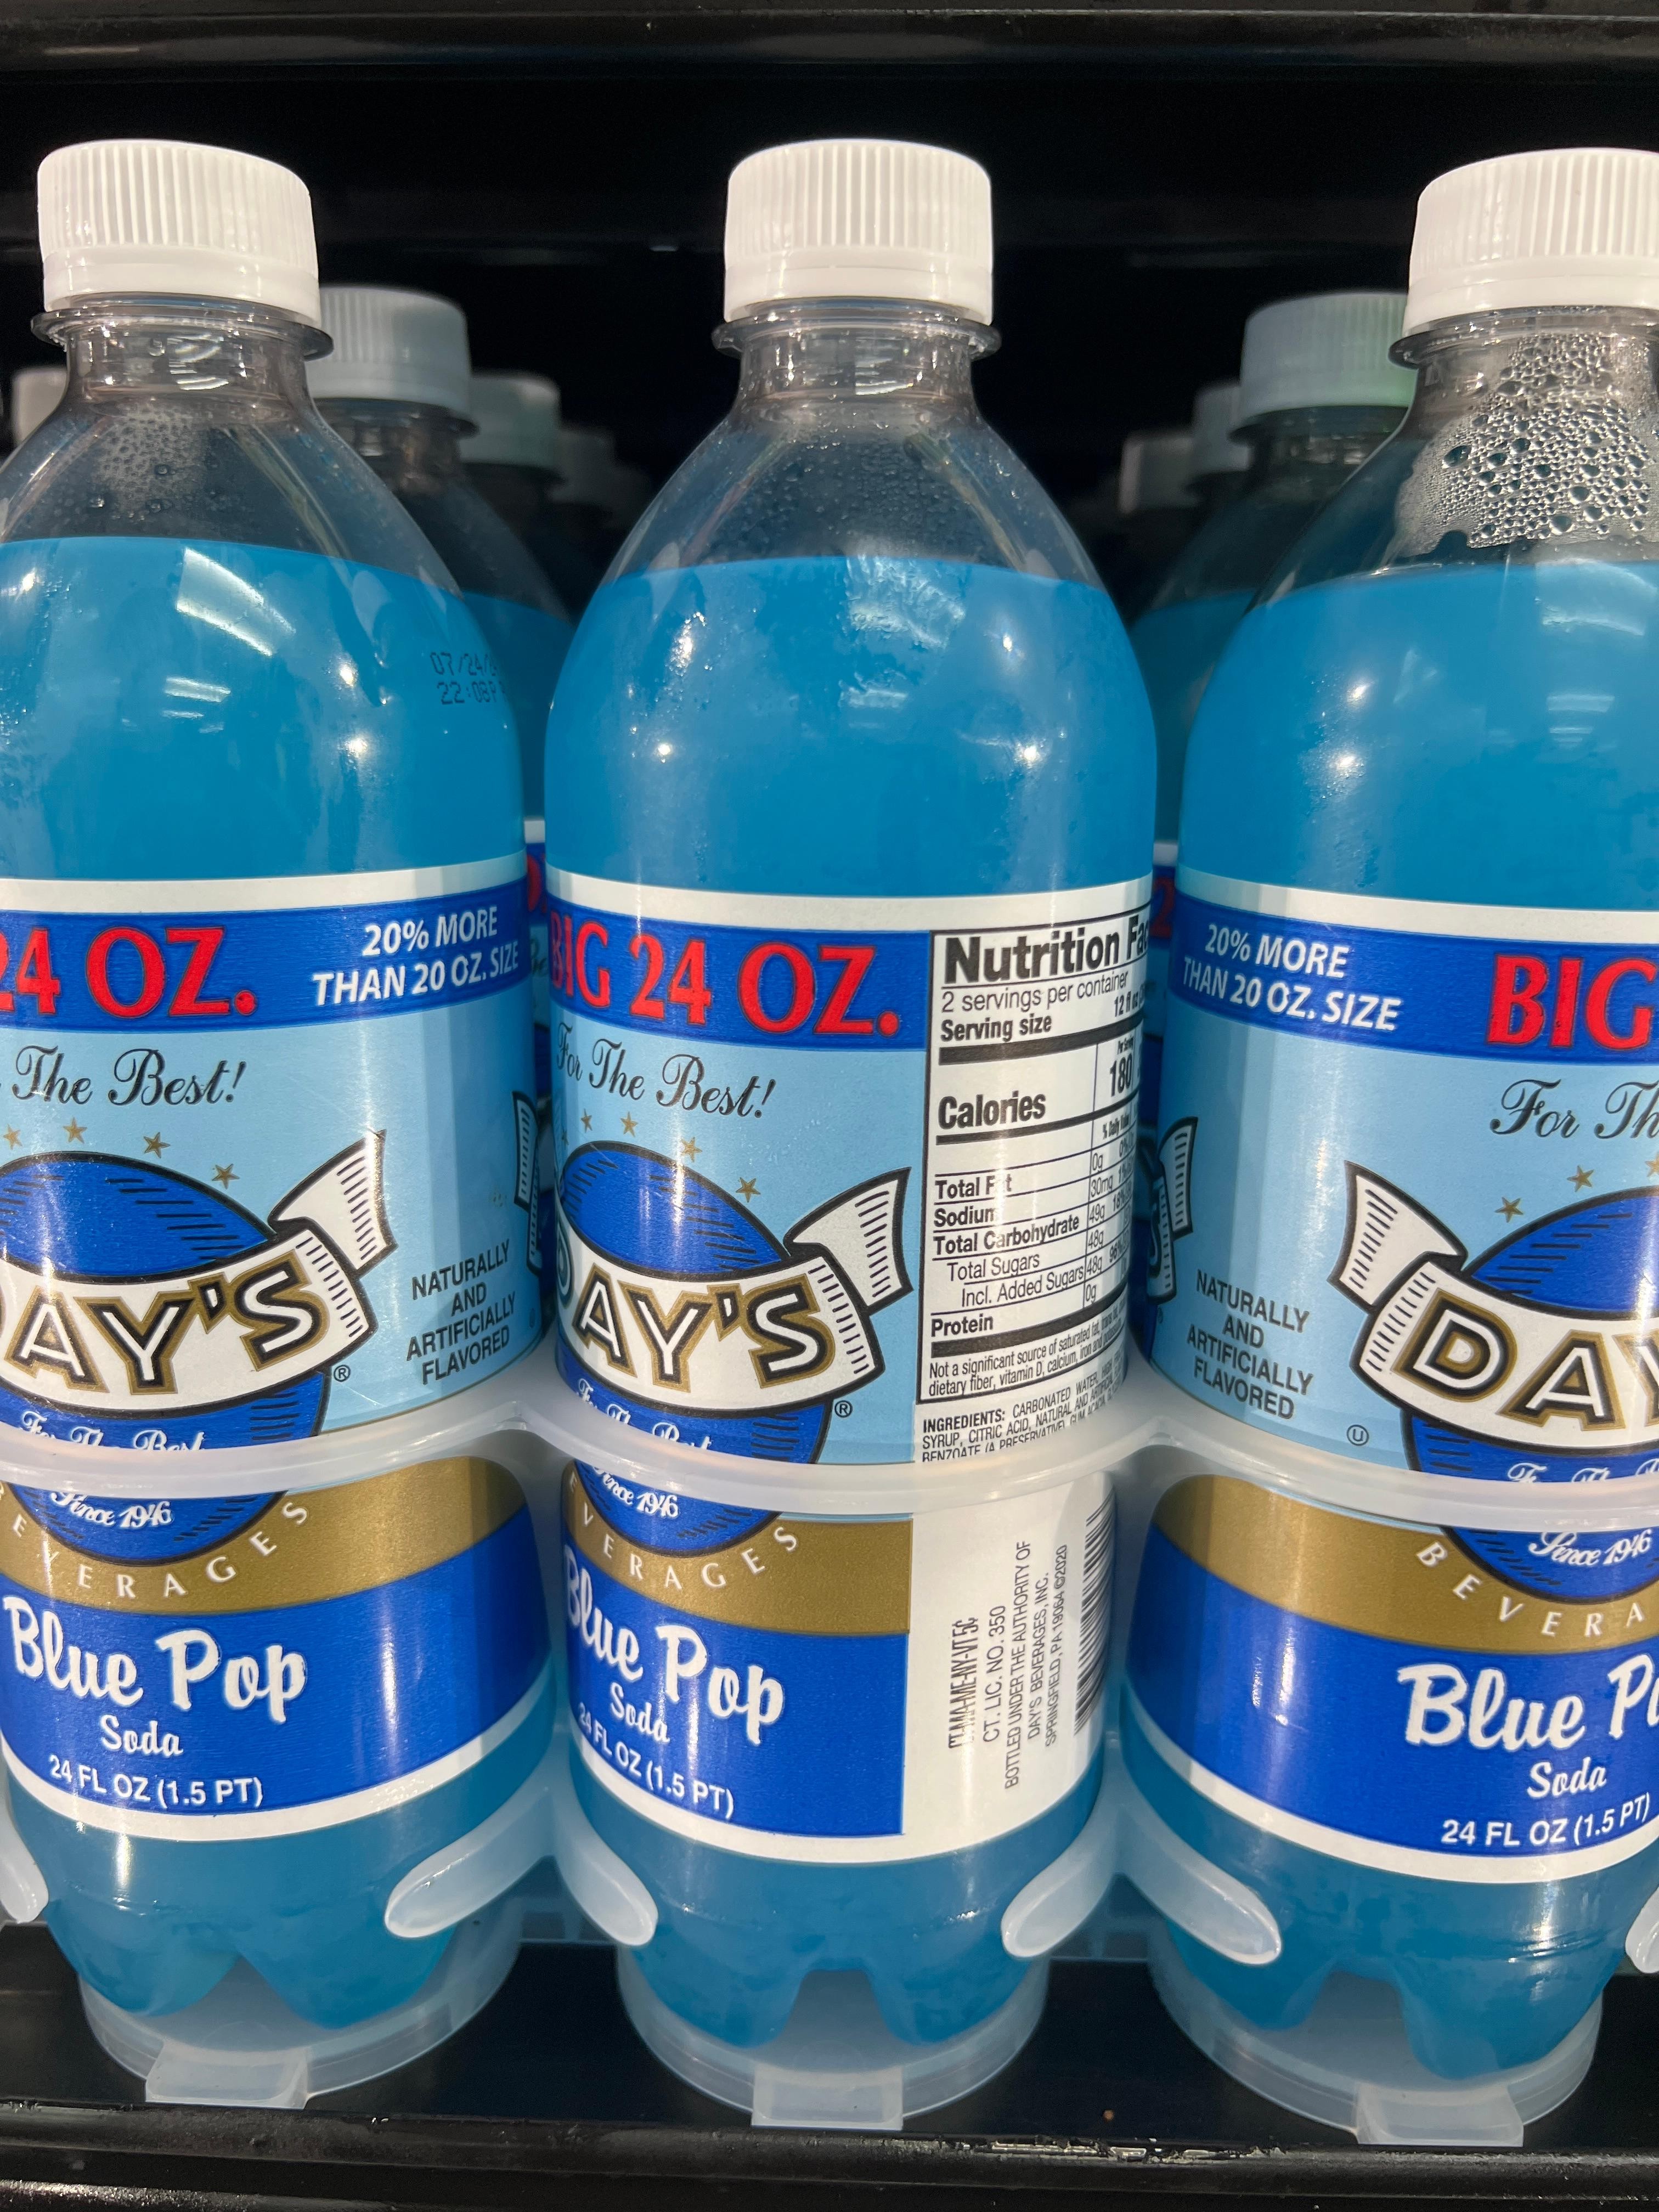 Day's, Blue Pop Soda